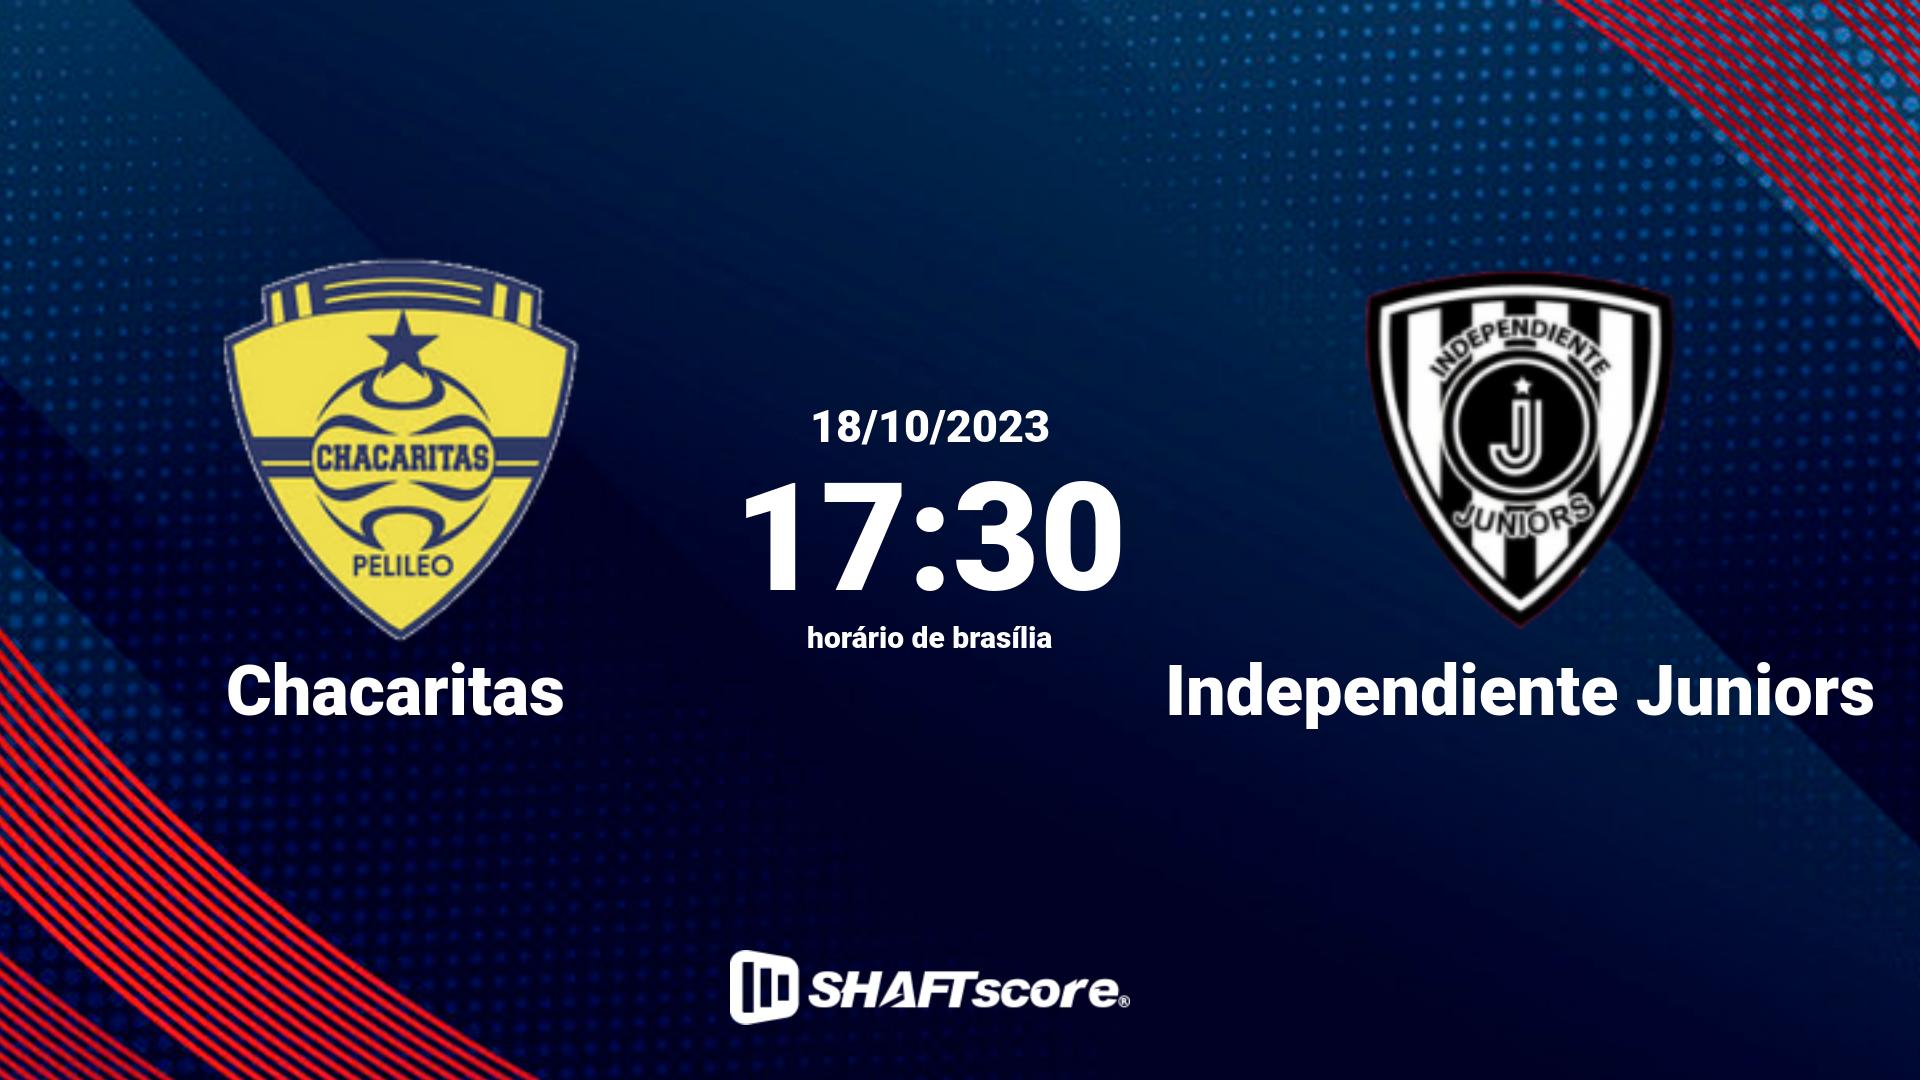 Estatísticas do jogo Chacaritas vs Independiente Juniors 18.10 17:30